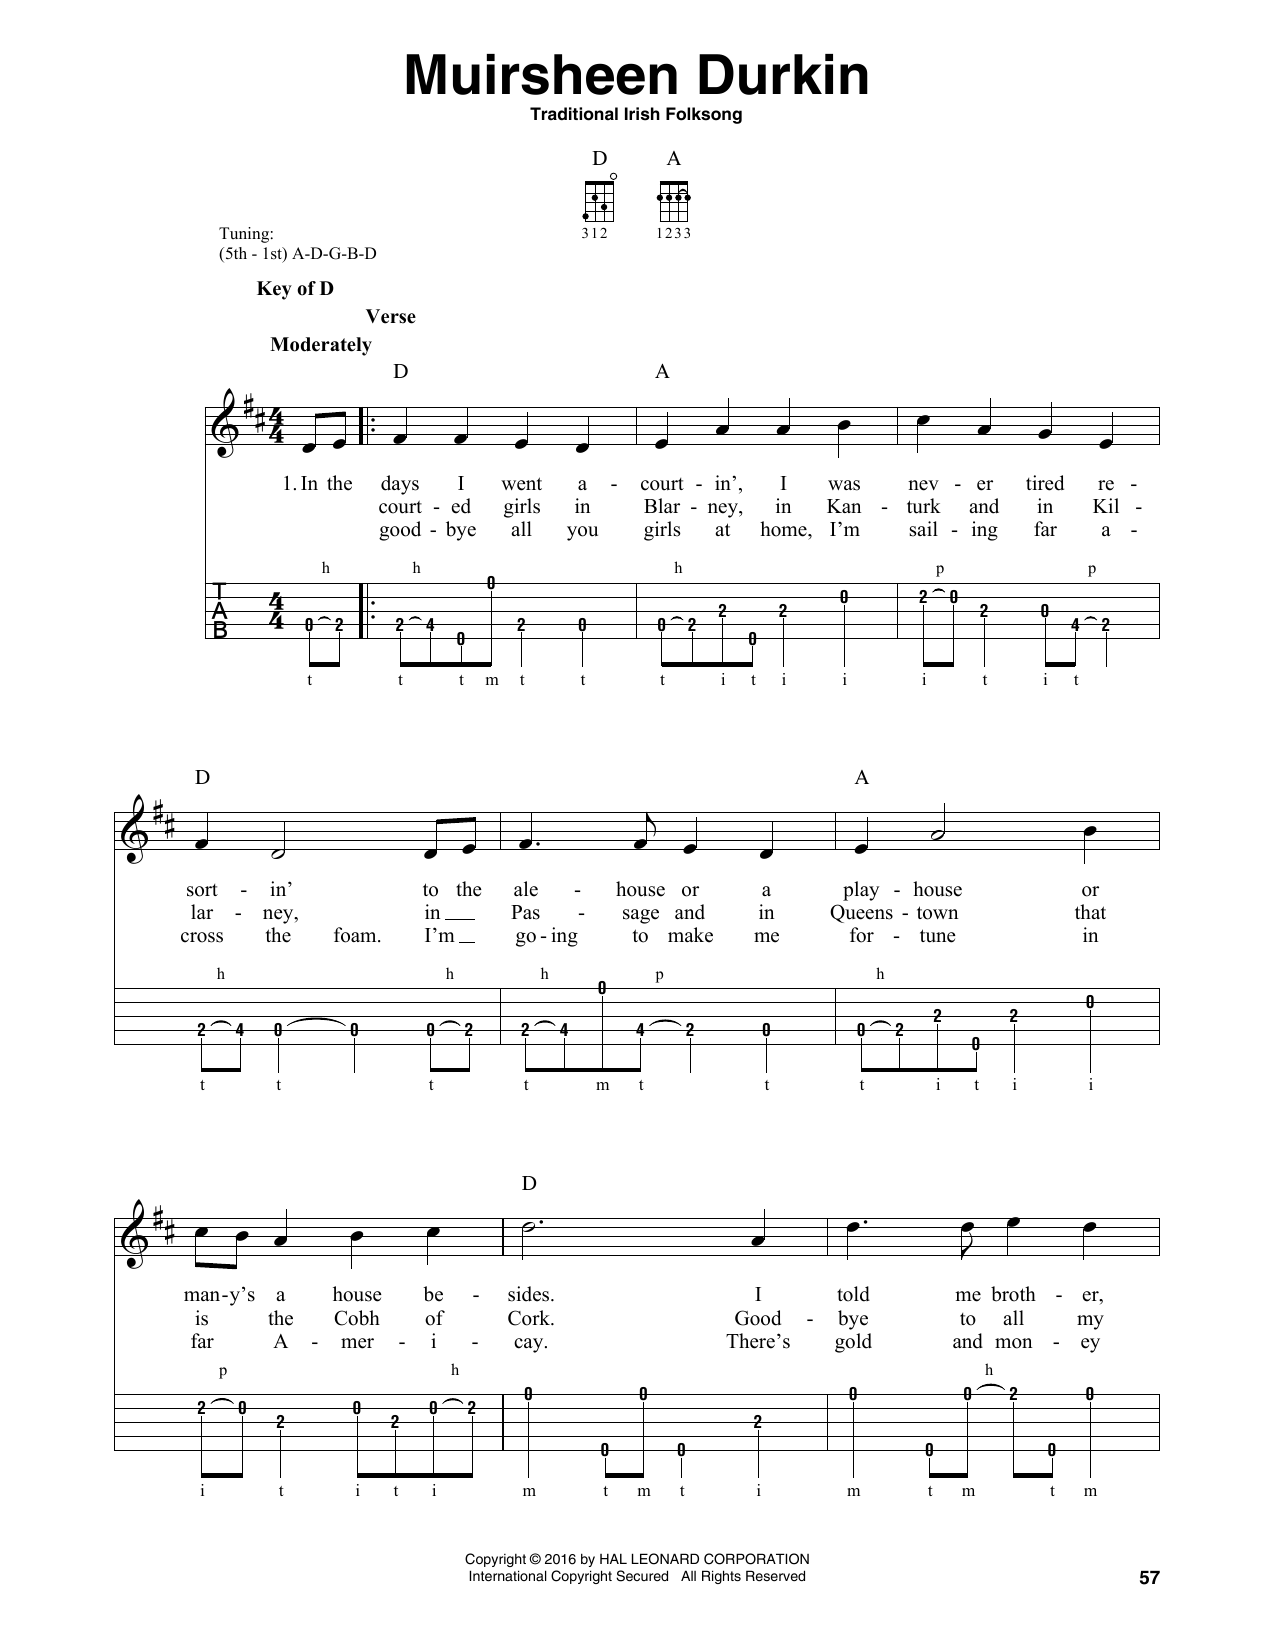 Download Traditional Irish Folk Song Muirsheen Durkin Sheet Music and learn how to play Banjo PDF digital score in minutes